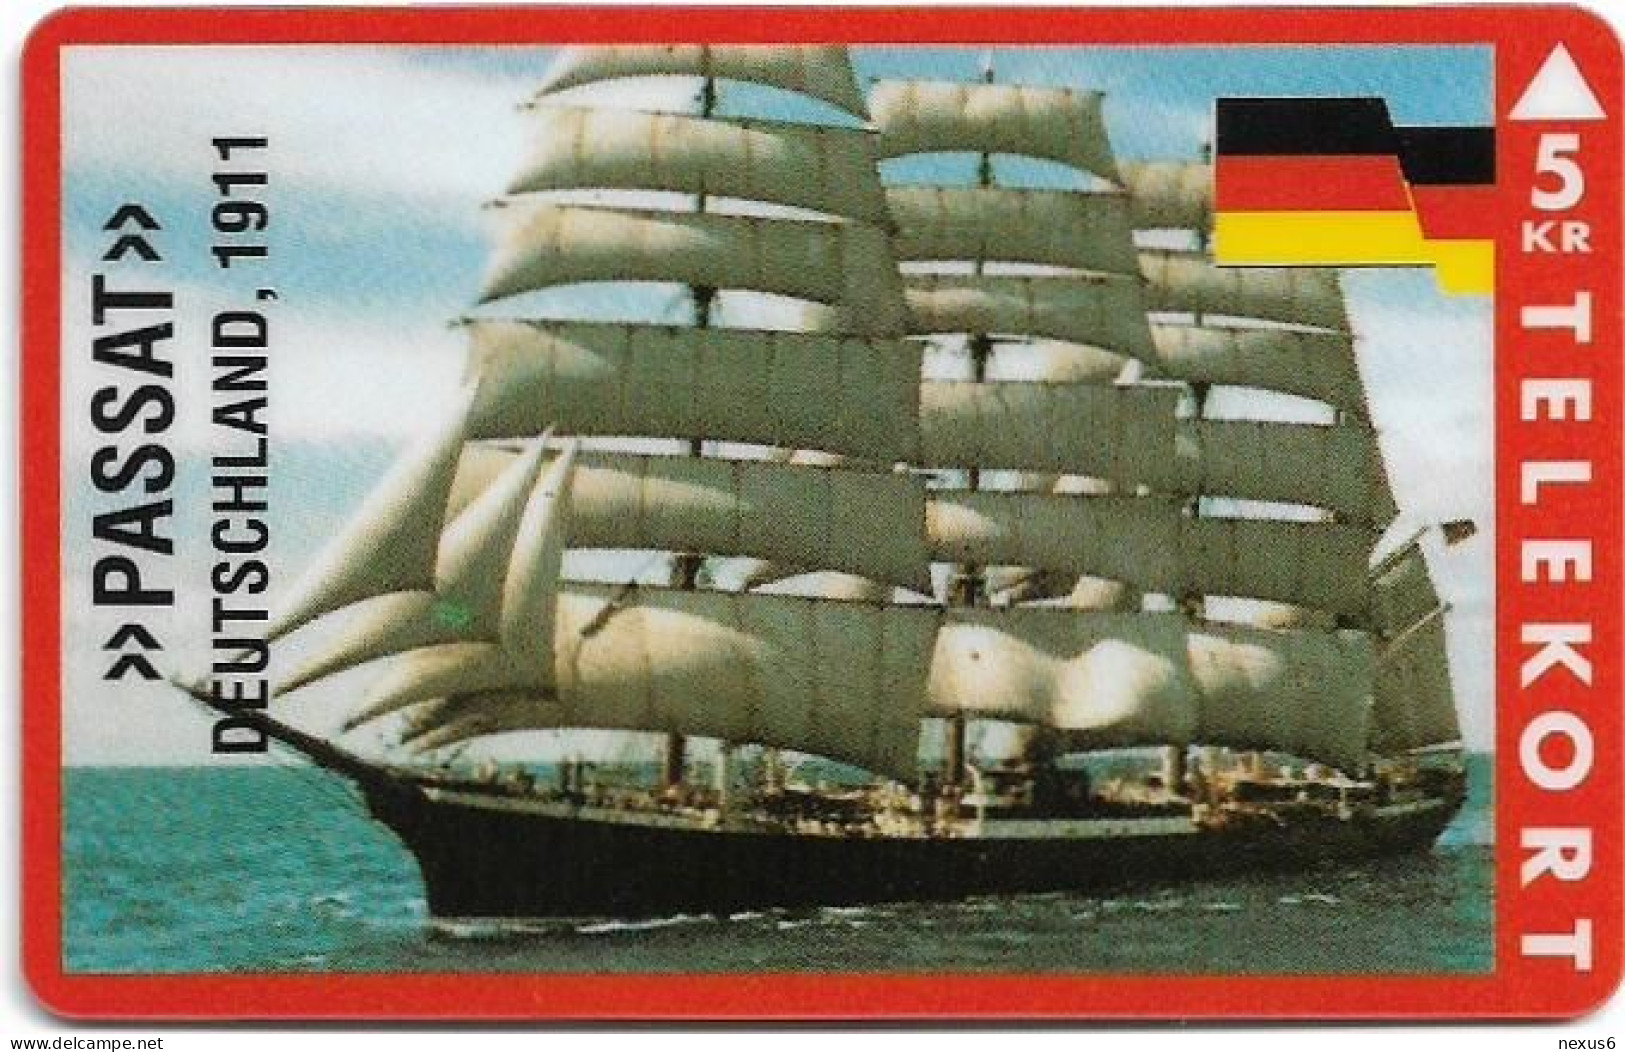 Denmark - KTAS - Ships (Red) - Germany - Passat - TDKP147 - 05.1995, 5kr, 1.500ex, Used - Dinamarca